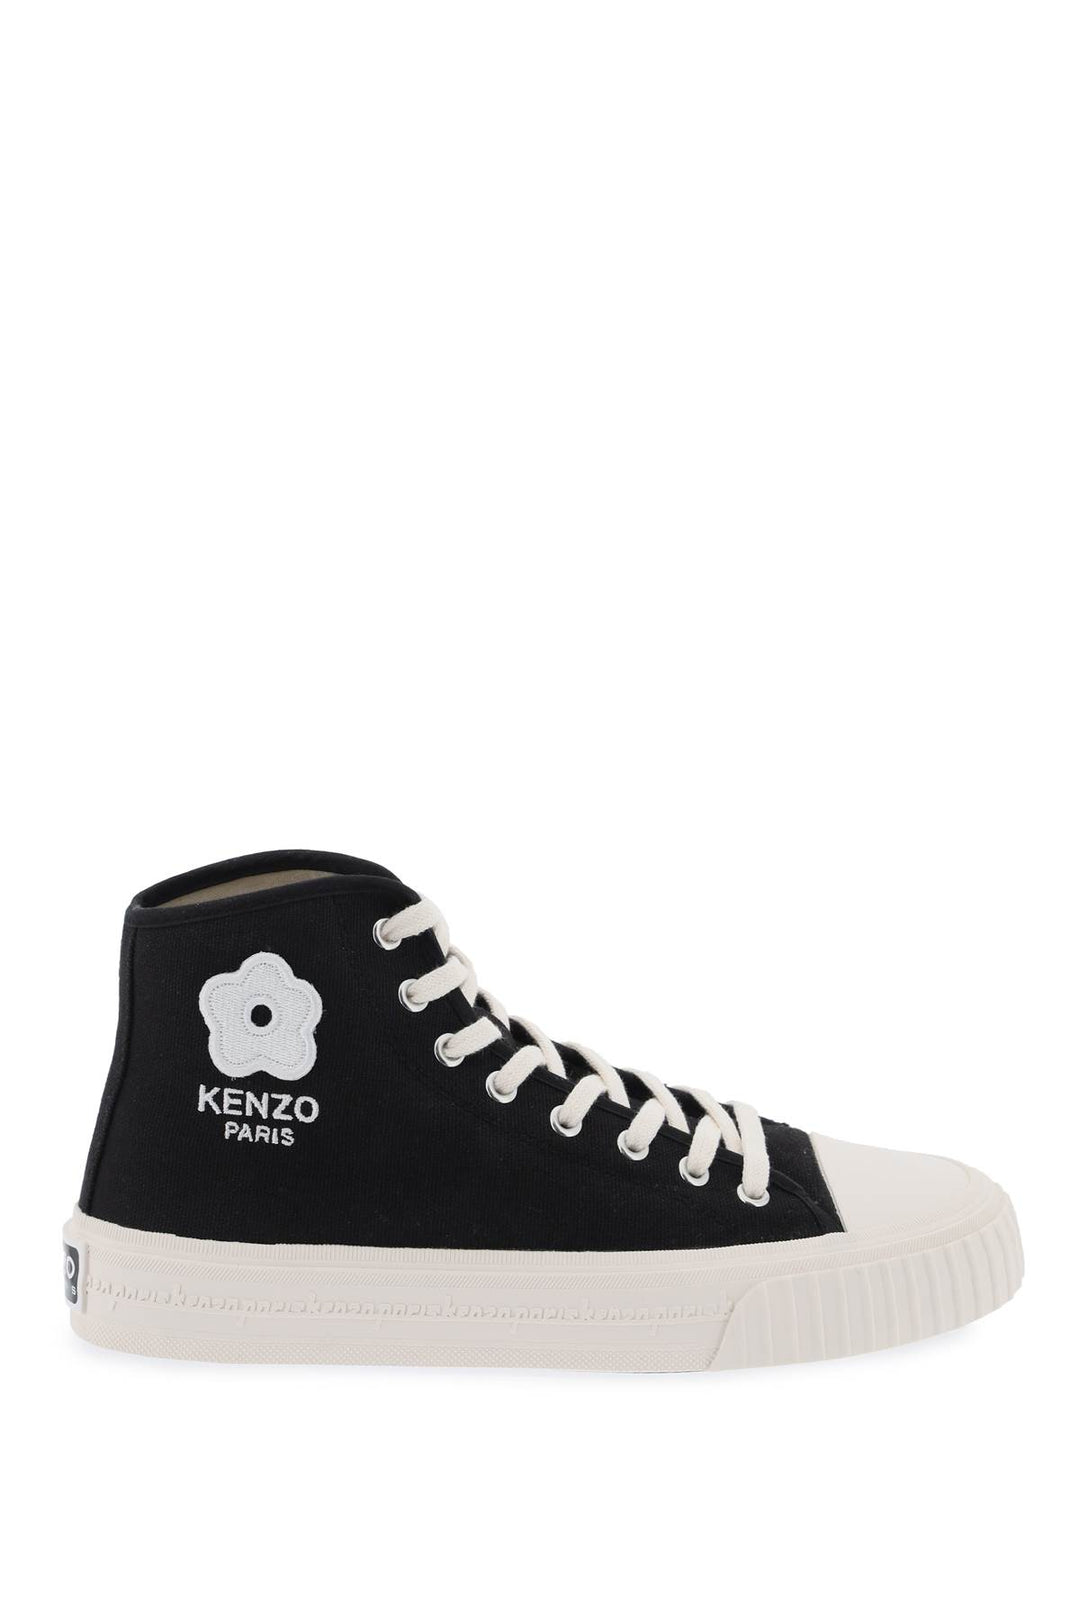 Kenzo Canvas Foxy High Top Sneakers   Nero